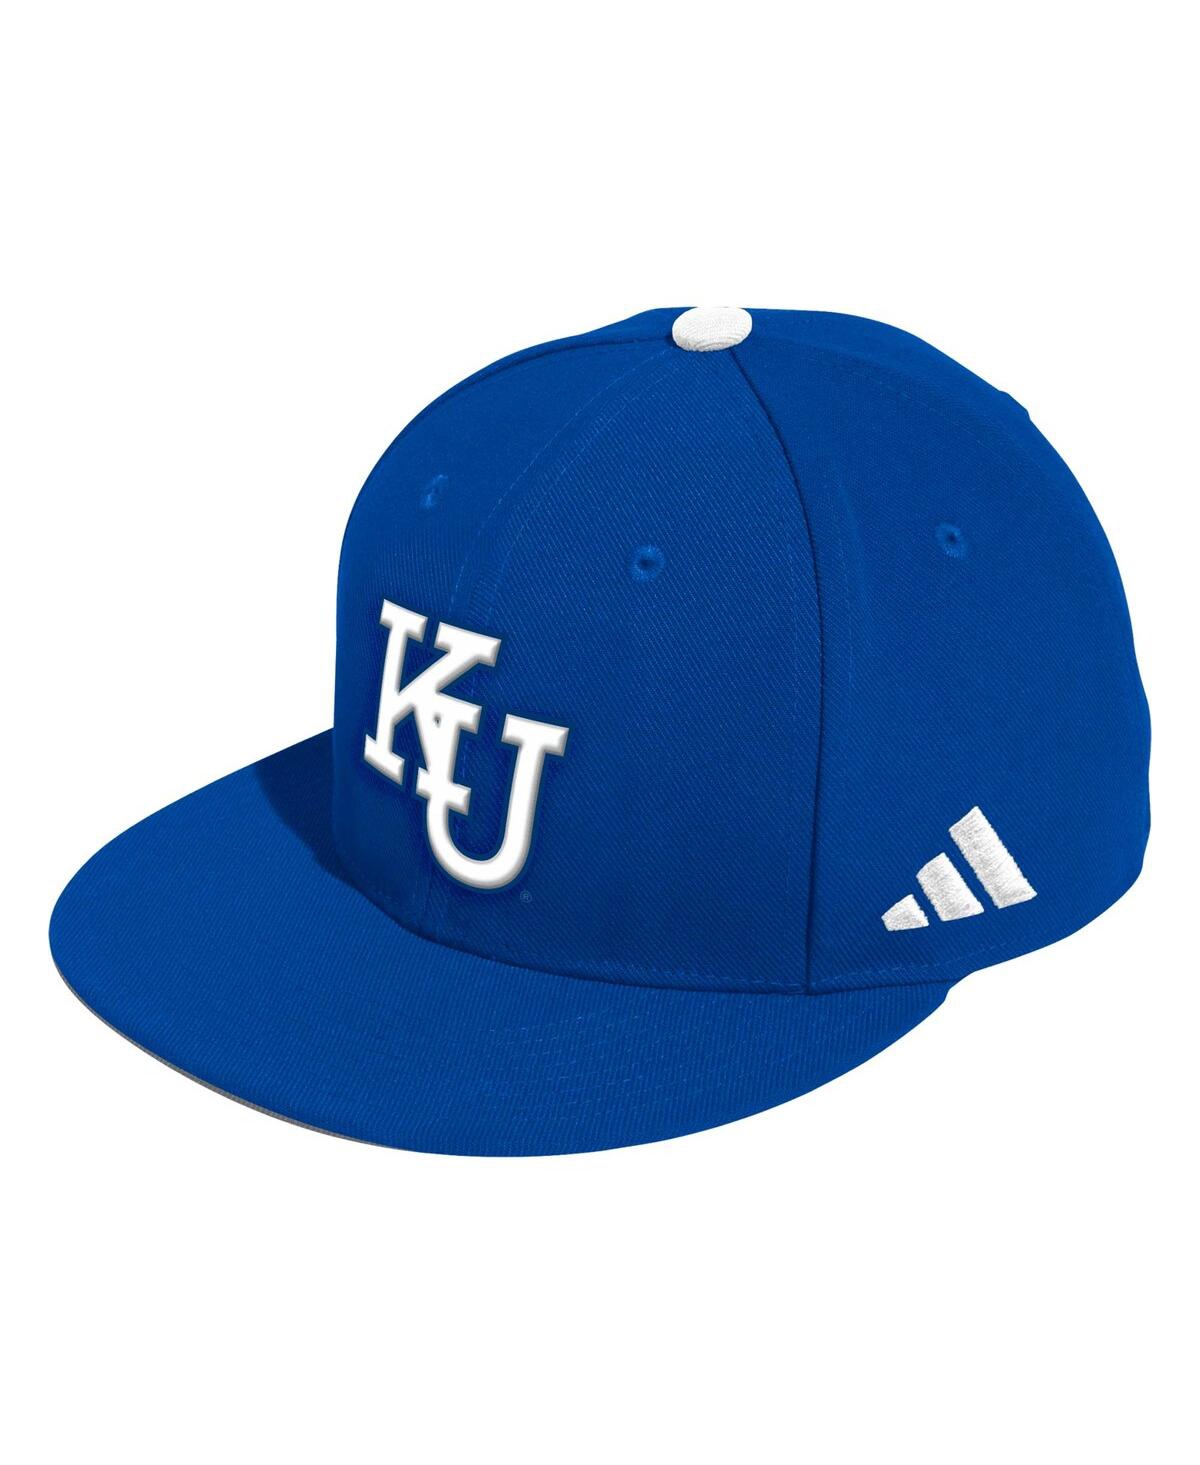 Shop Adidas Originals Men's Adidas Royal Kansas Jayhawks On-field Baseball Fitted Hat